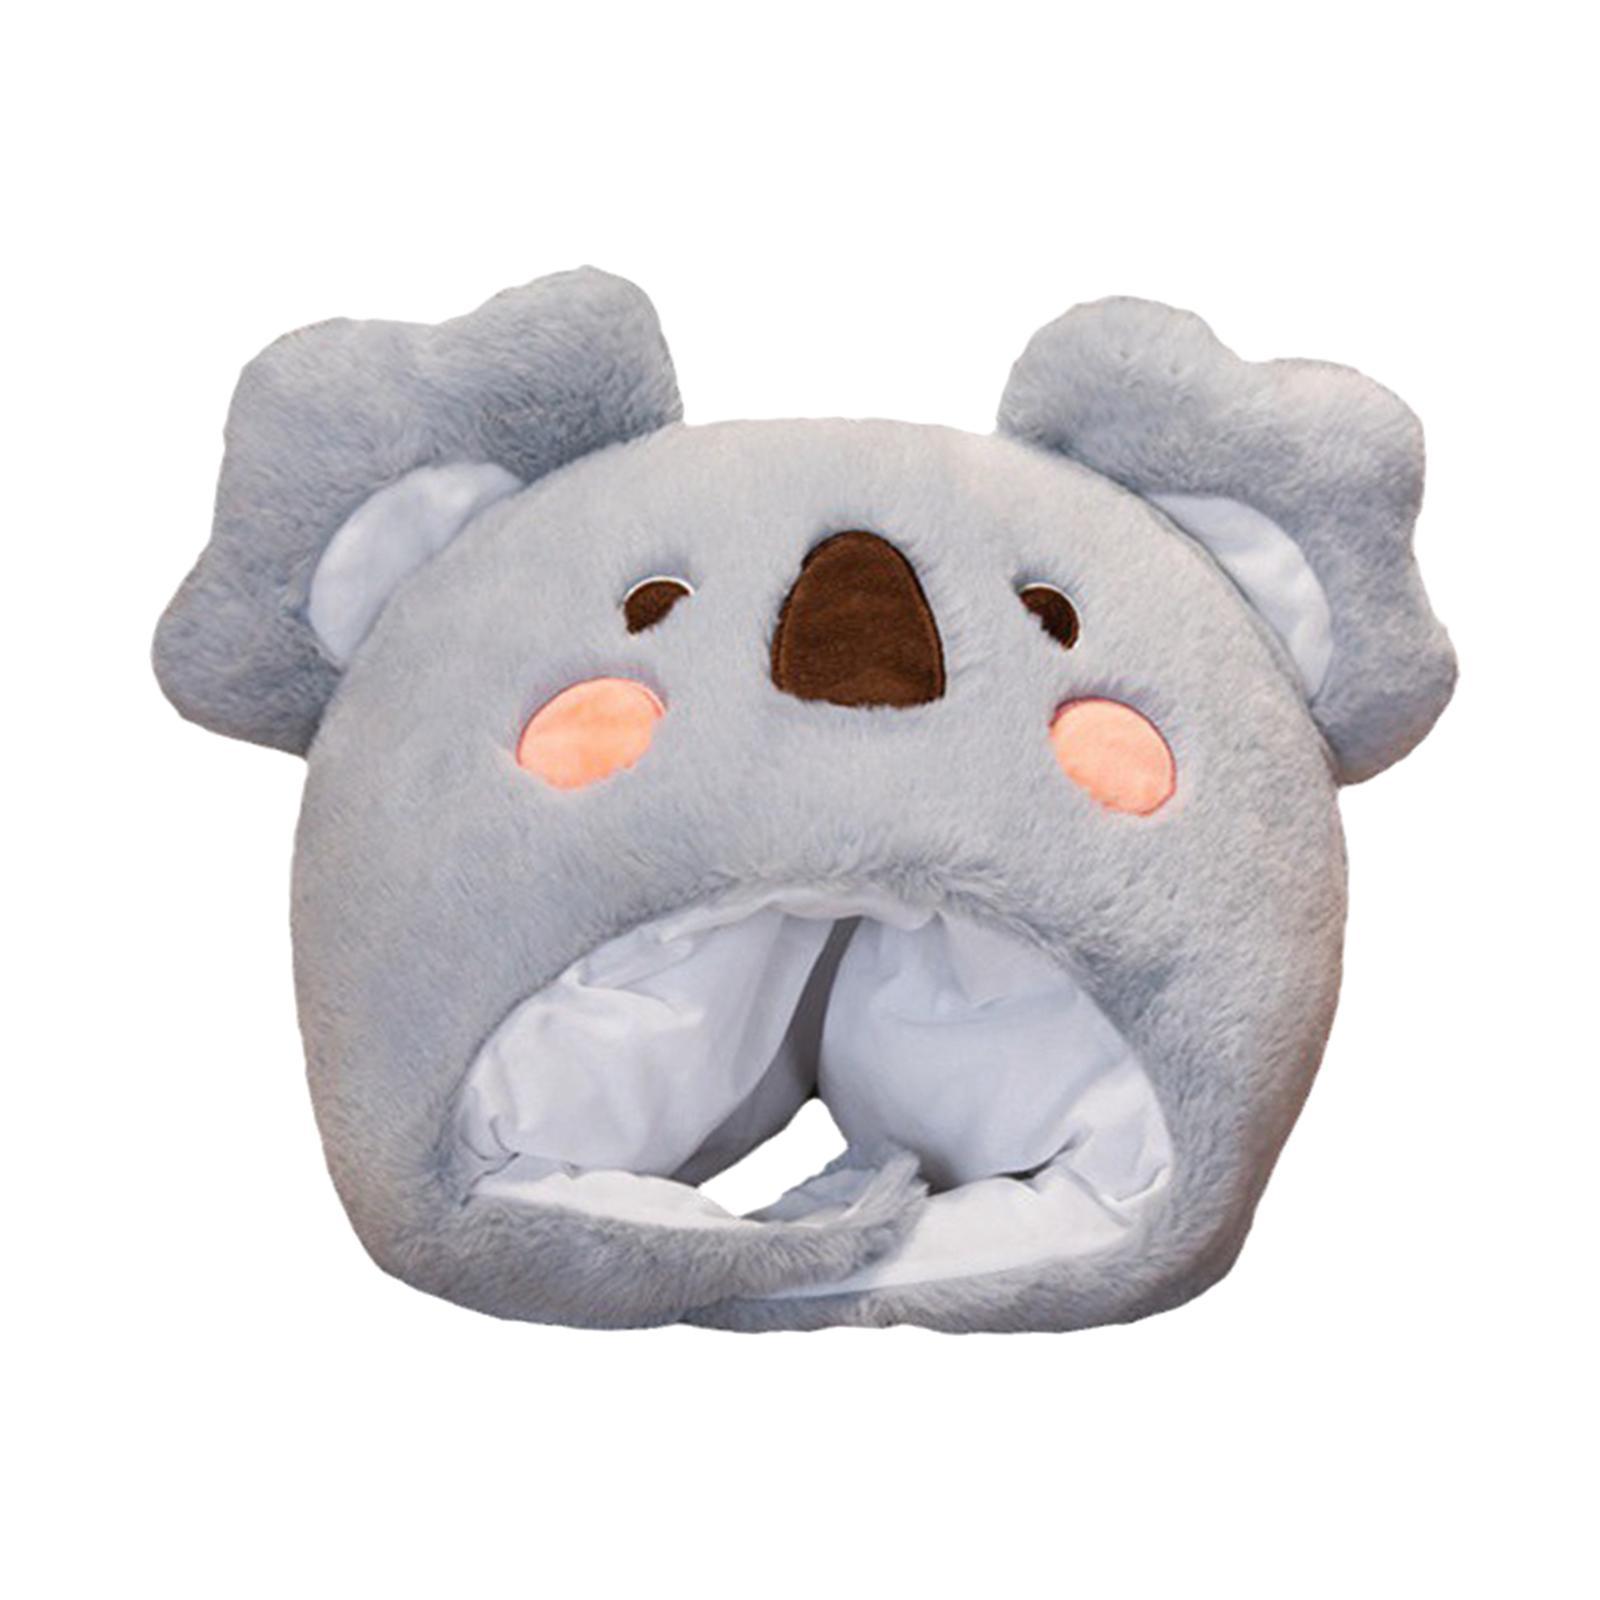 Soft Plush Koala Hat Apparel Cute Headgear for Festival Halloween Role Play